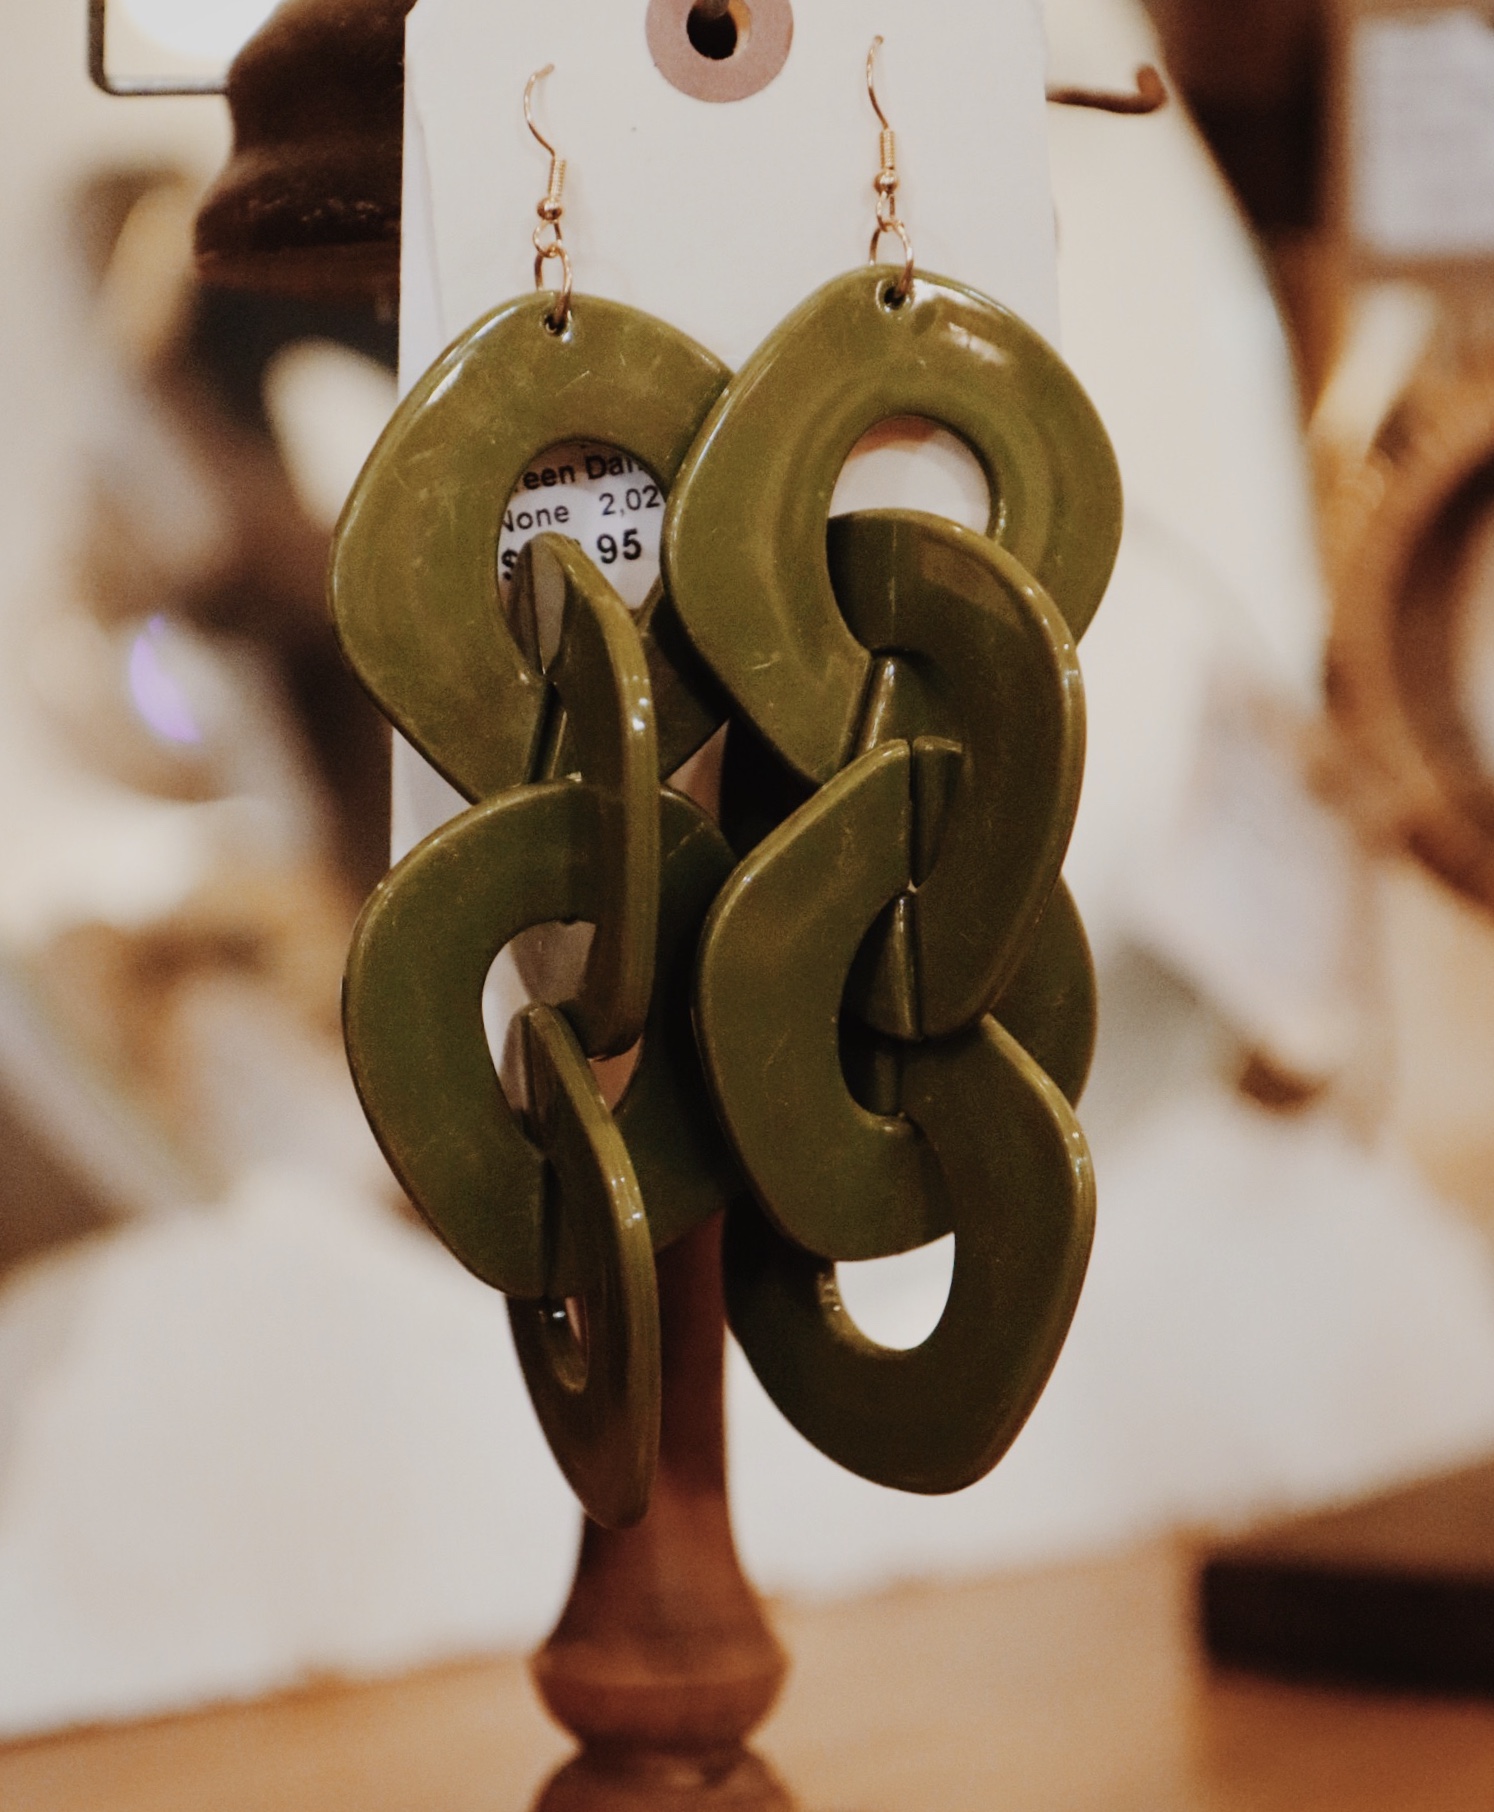 Green Resin Interlocked Oblong Dangle Earrings, Measuring 5.5 inches long